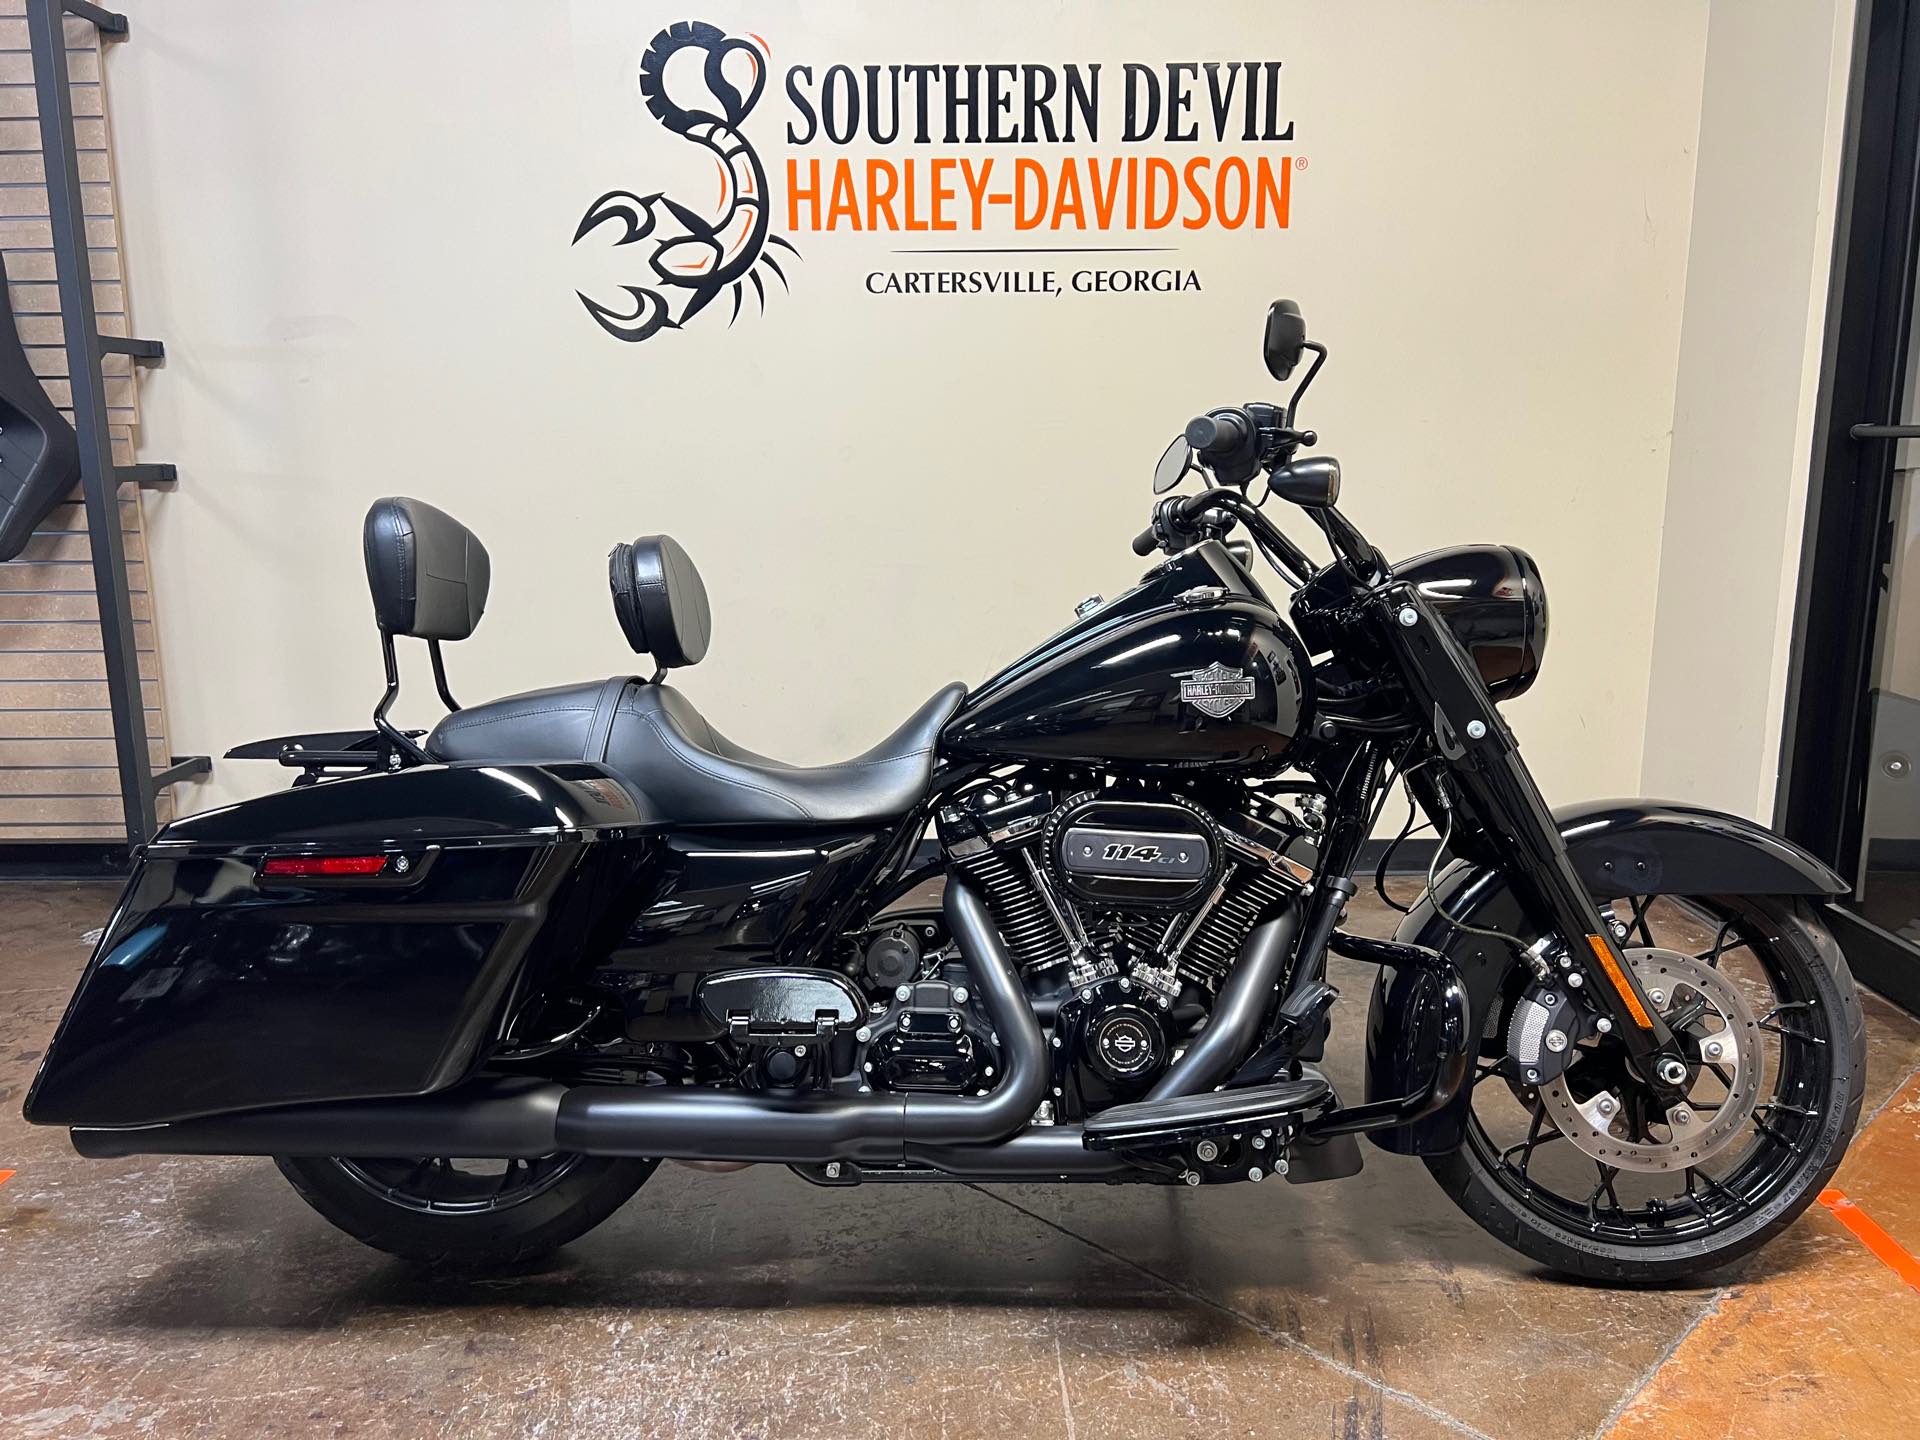 2021 Harley-Davidson Road King Special Road King Special at Southern Devil Harley-Davidson